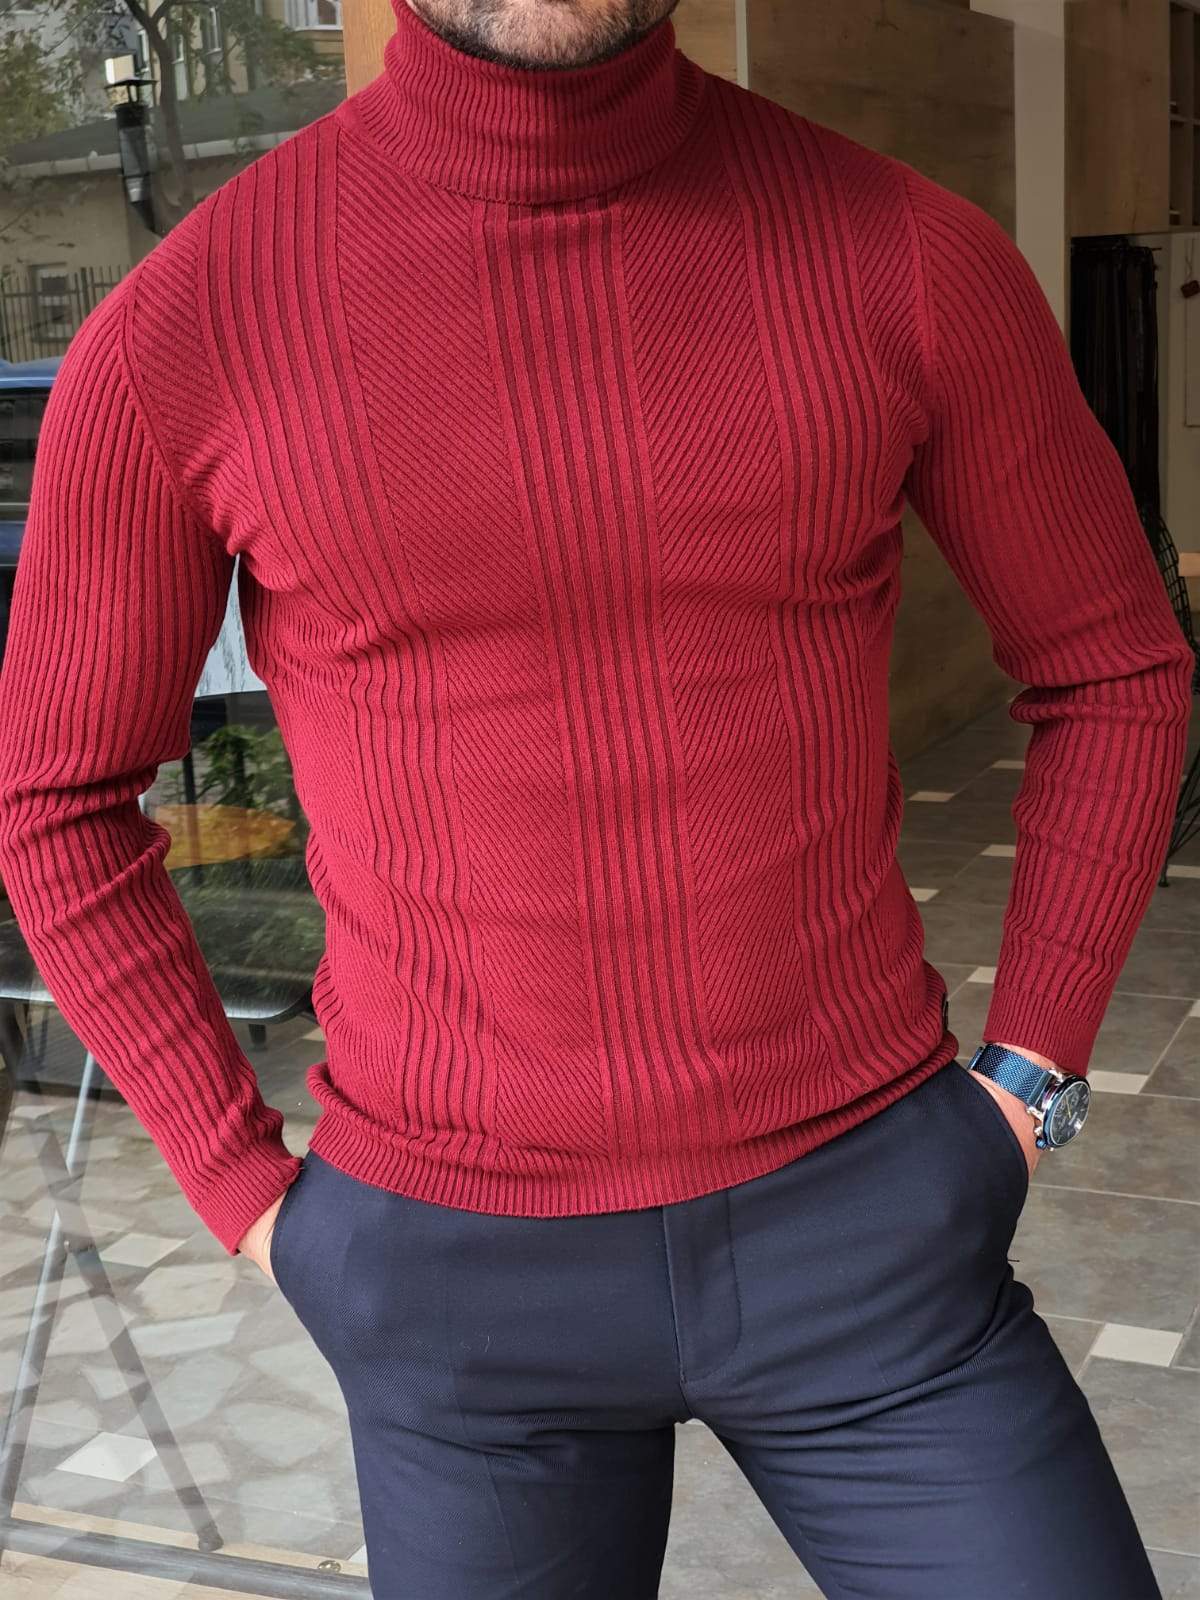 Elko Claret Red Slim Fit Striped Turtleneck Wool Sweater